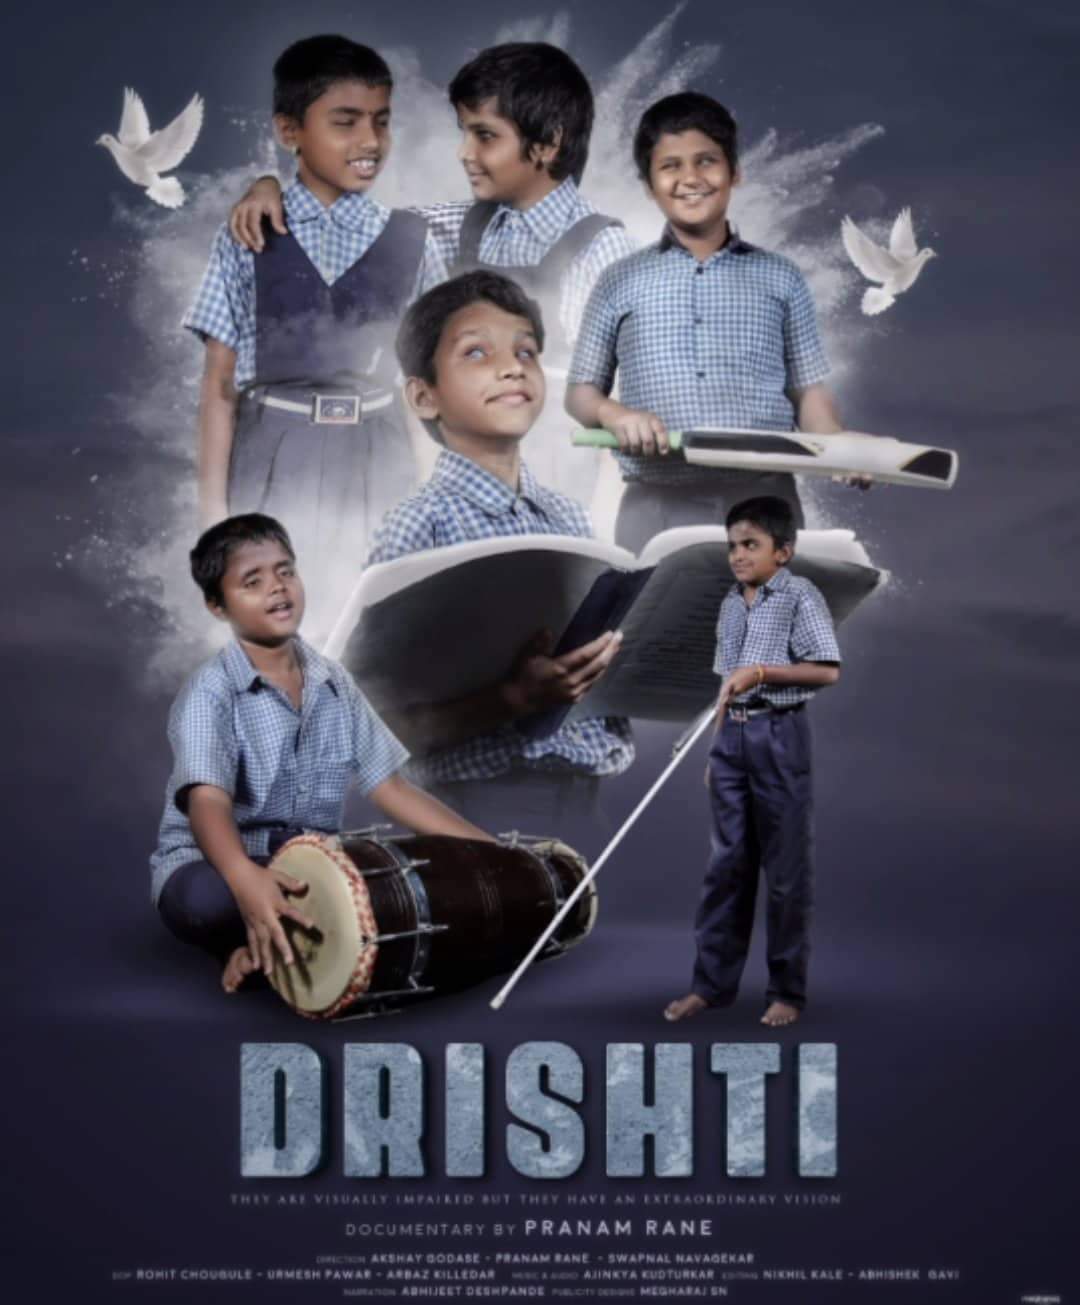 Drushti